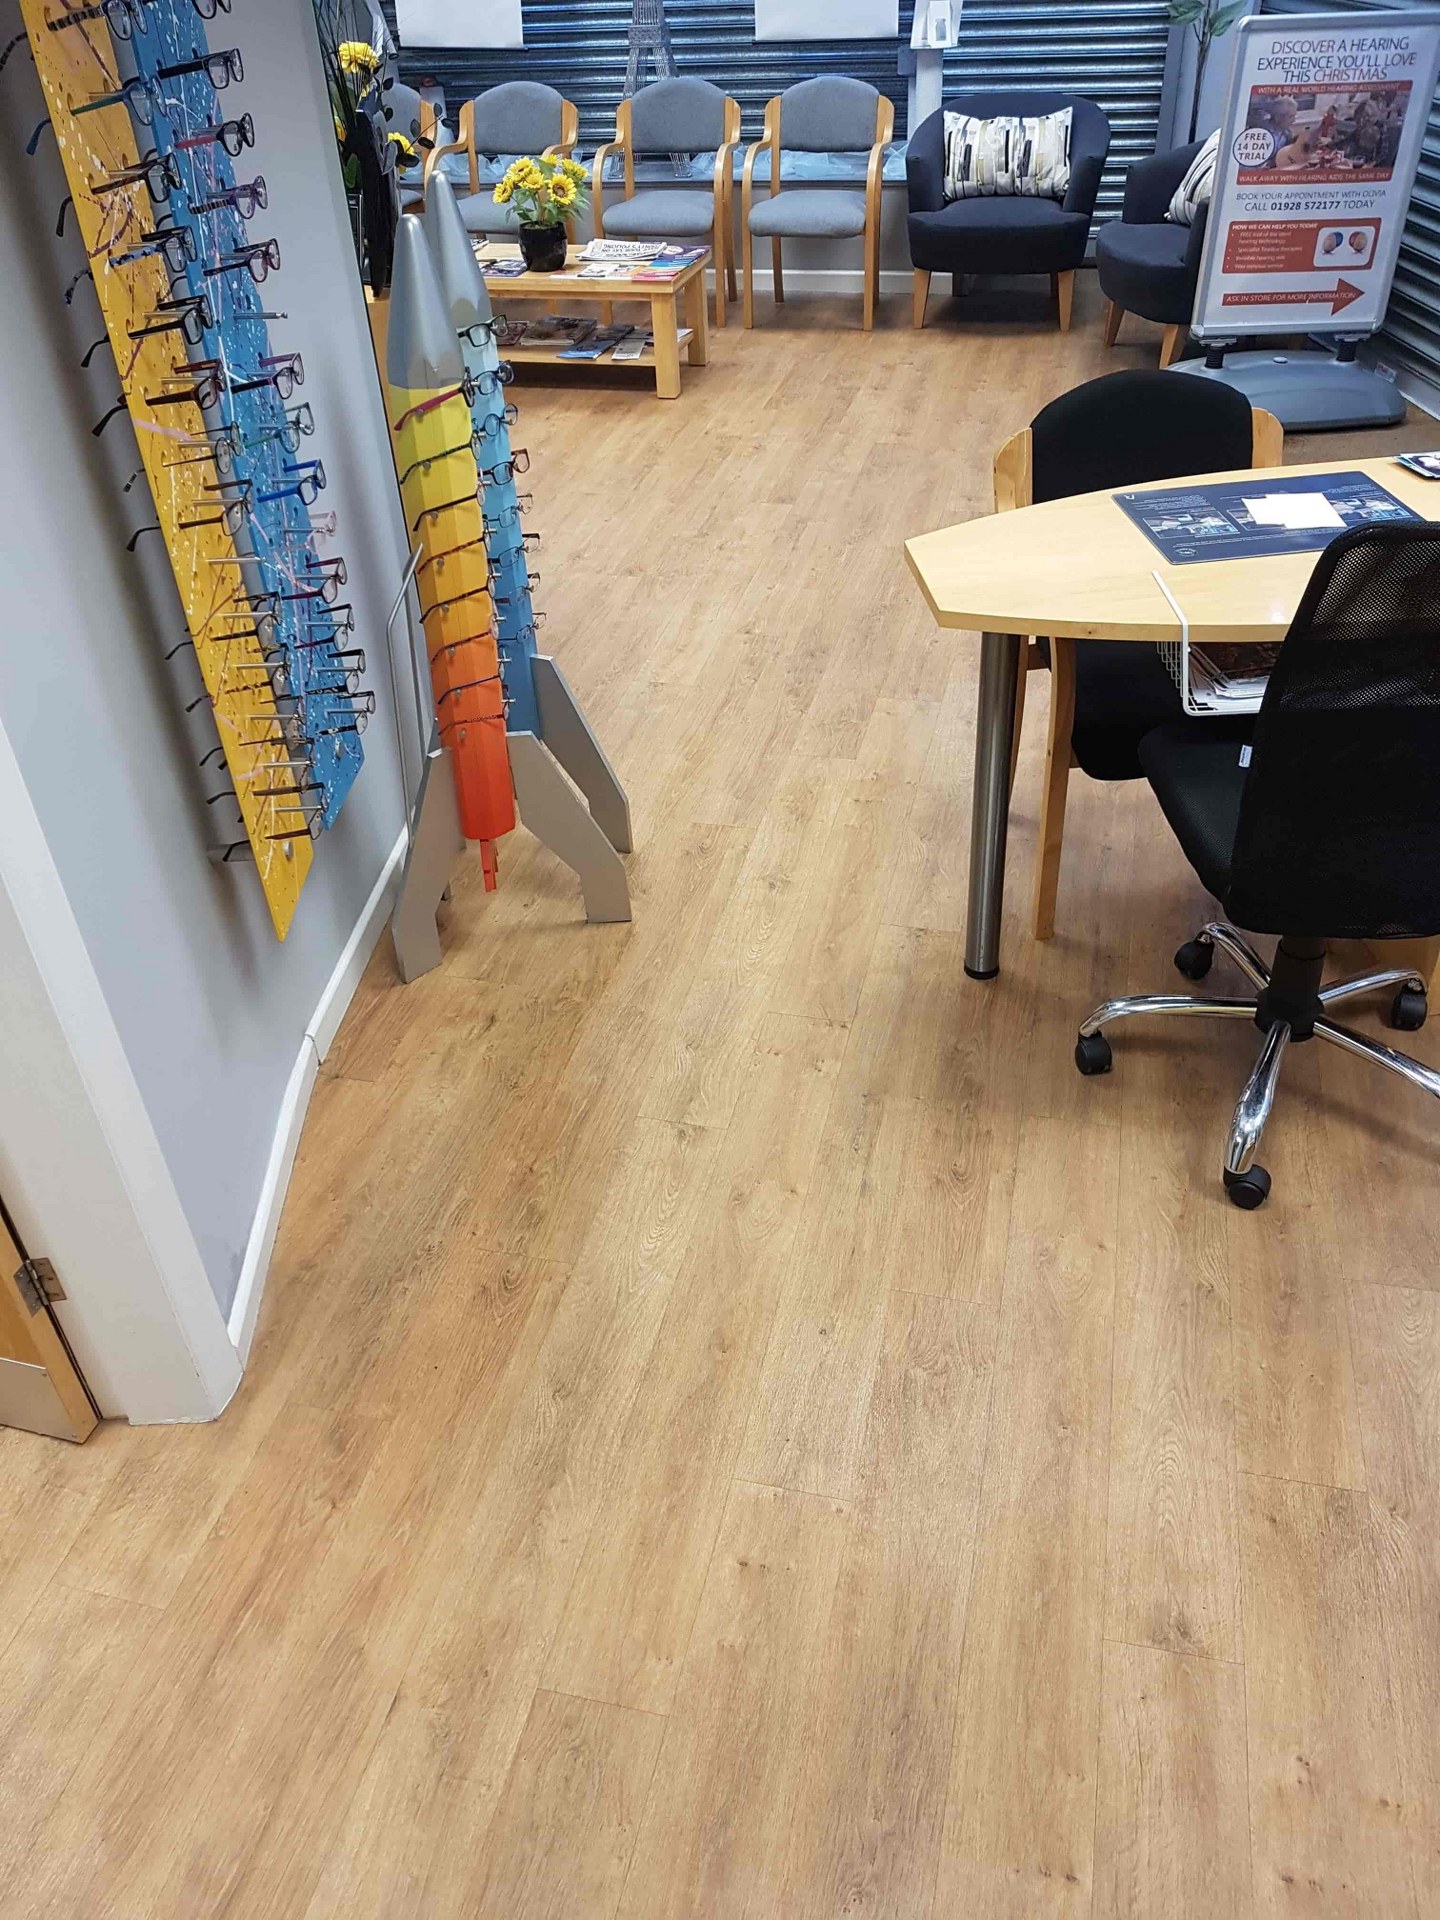 Opticians Vinyl Floor Before Cleaning Stockton Heath